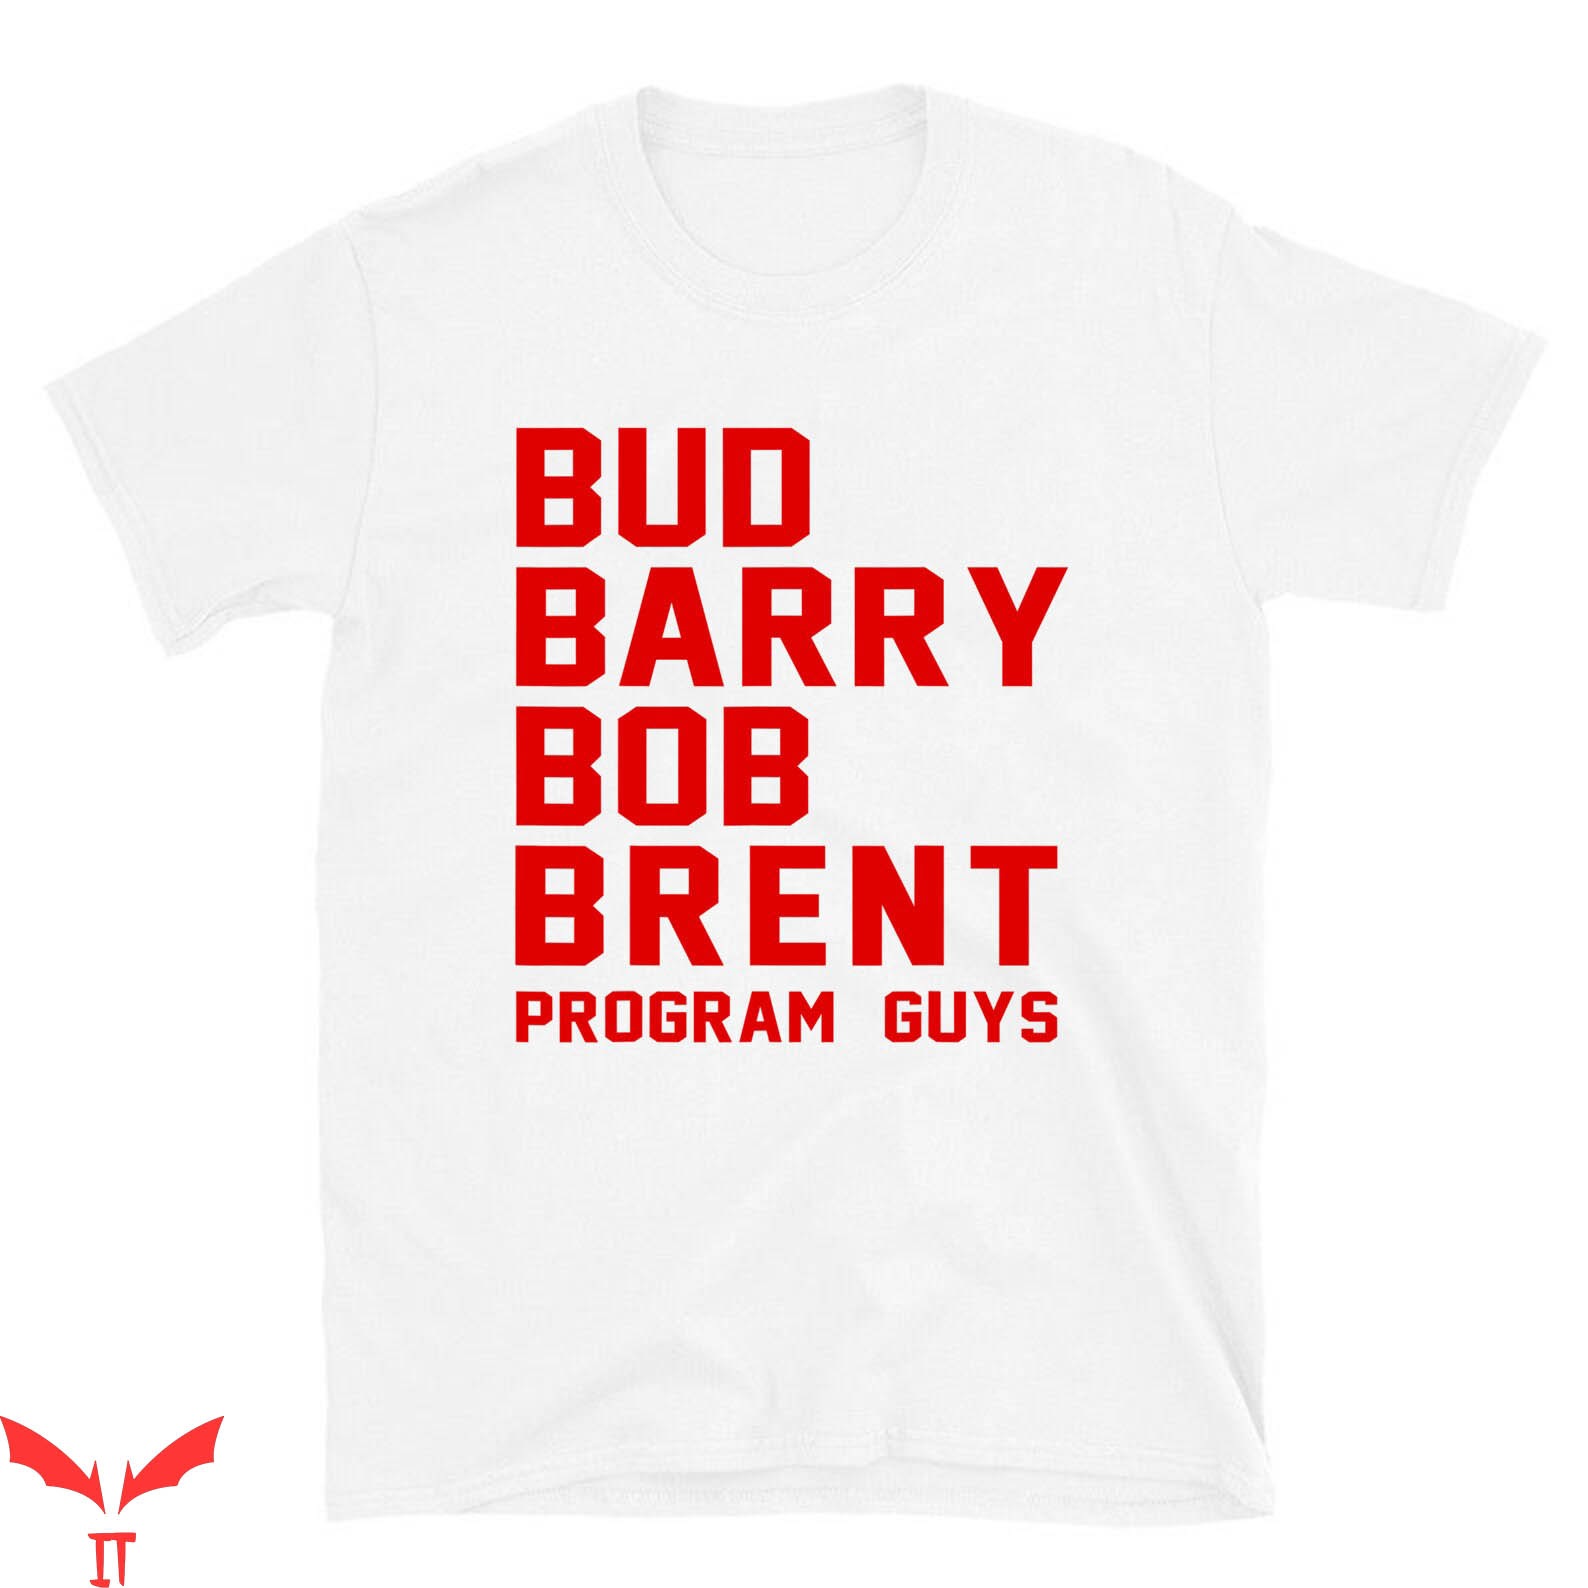 Bud Barry Bob Brent T-Shirt Cool Design Retro Graphic Shirt